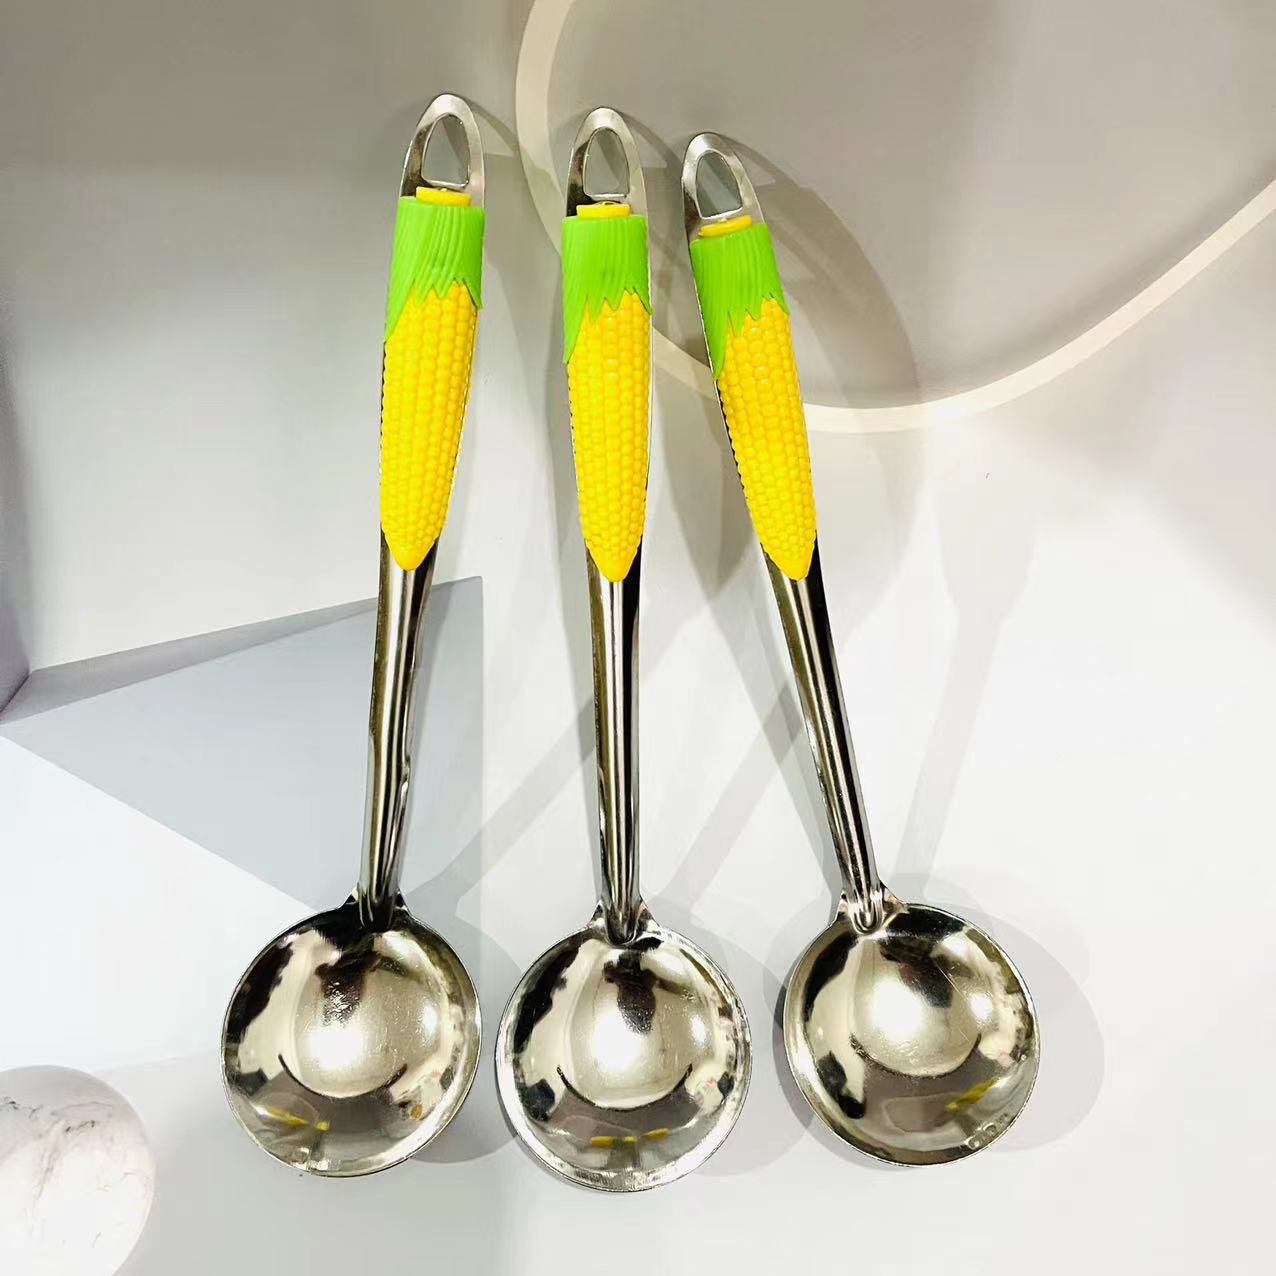 Corn Spoon Metal Spoon Long Handle Anti-Scald Household Kitchen Hot Pot Spoon 1 Yuan Supply